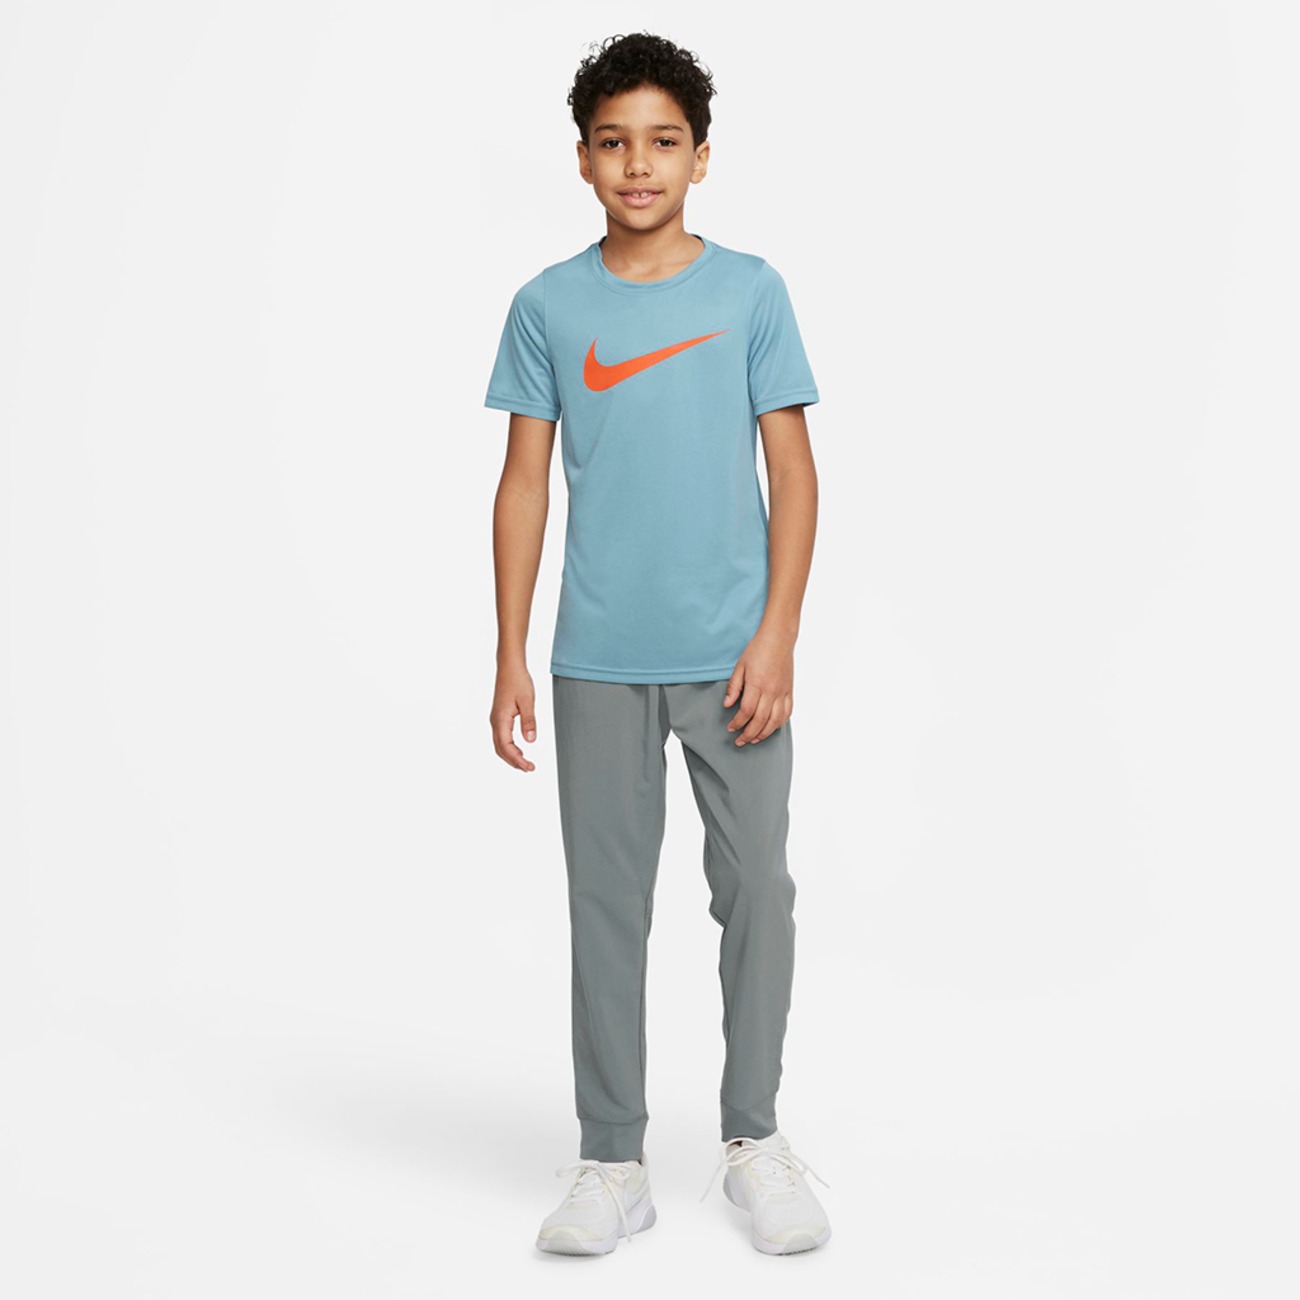 Camiseta Nike Dri-FIT Infantil - Foto 4